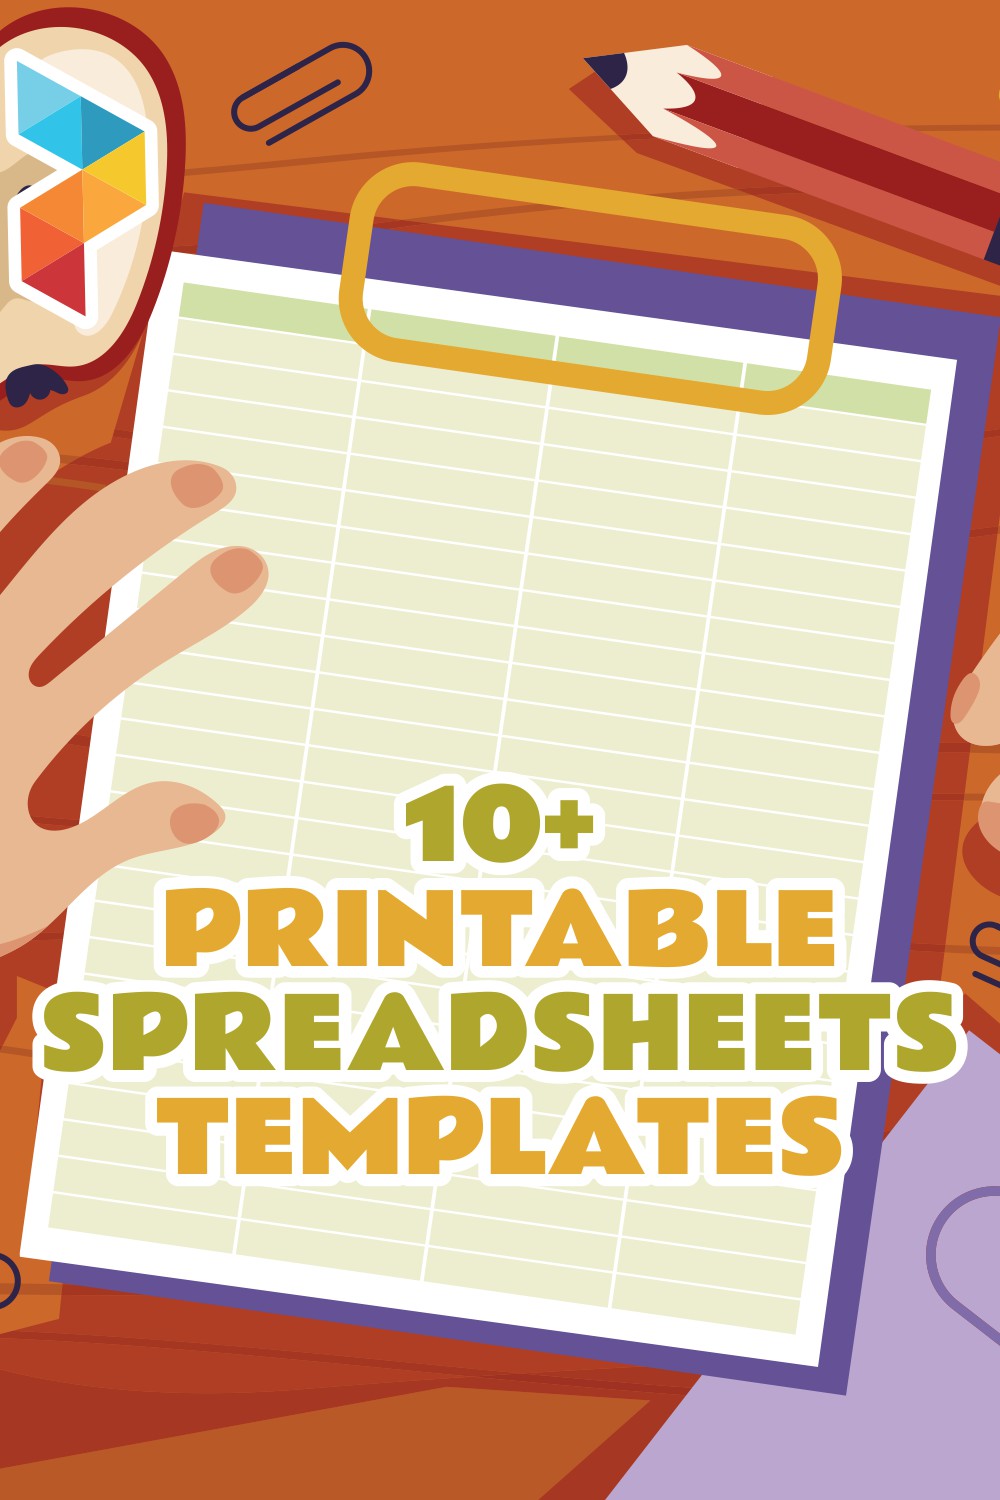 Printable Spreadsheets Templates